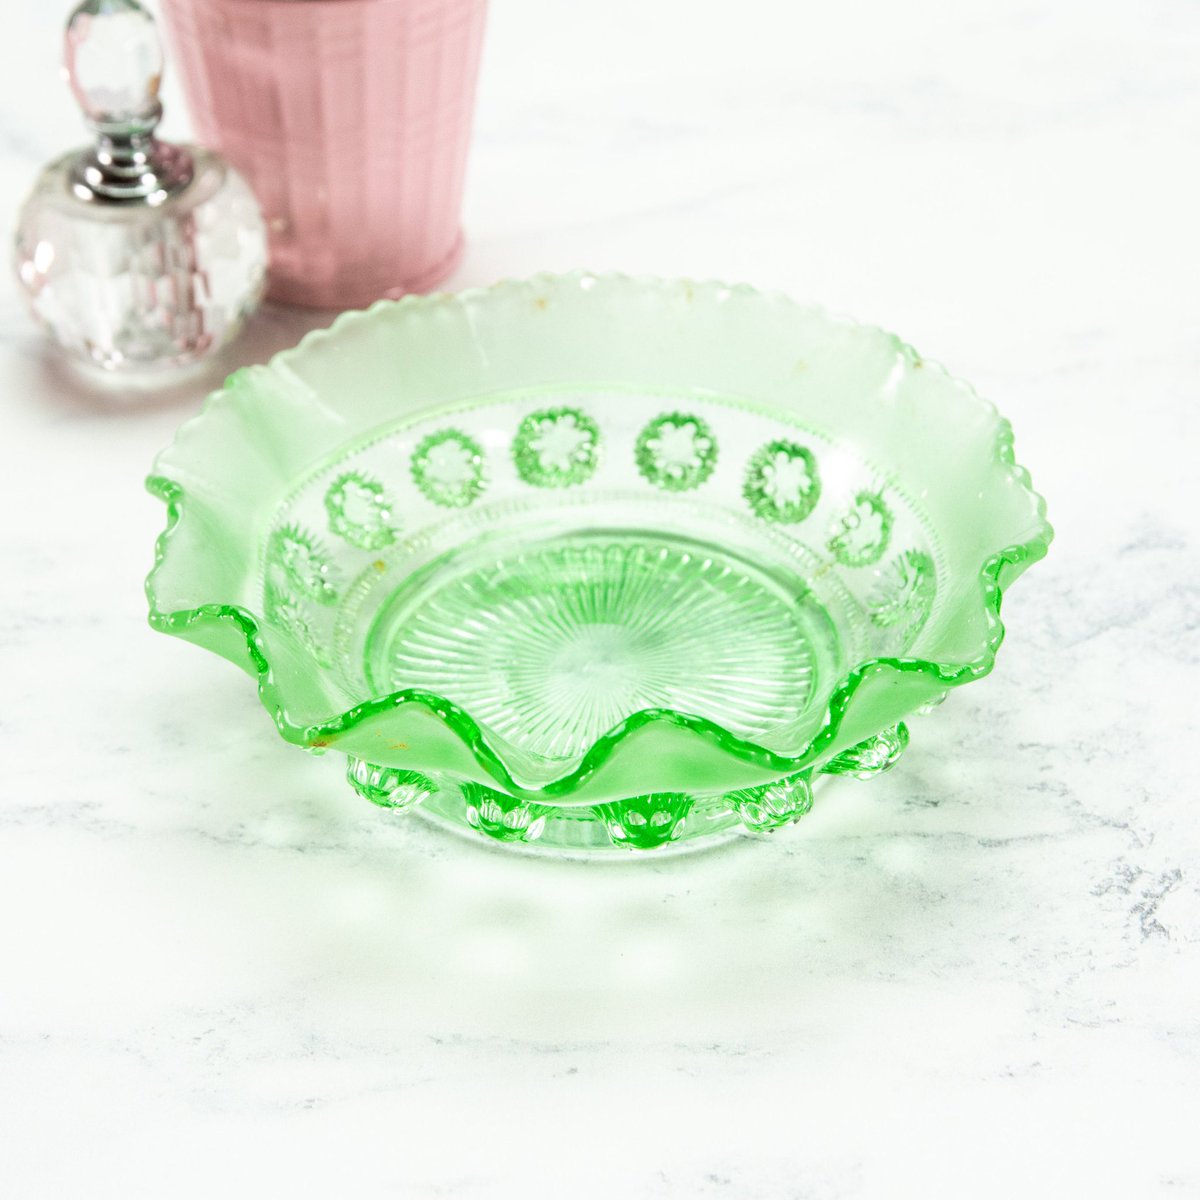 We have some great vintage items #etsy shop: Vintage Green Glass Candy Dish #vintageglassware etsy.me/3eX7jmy